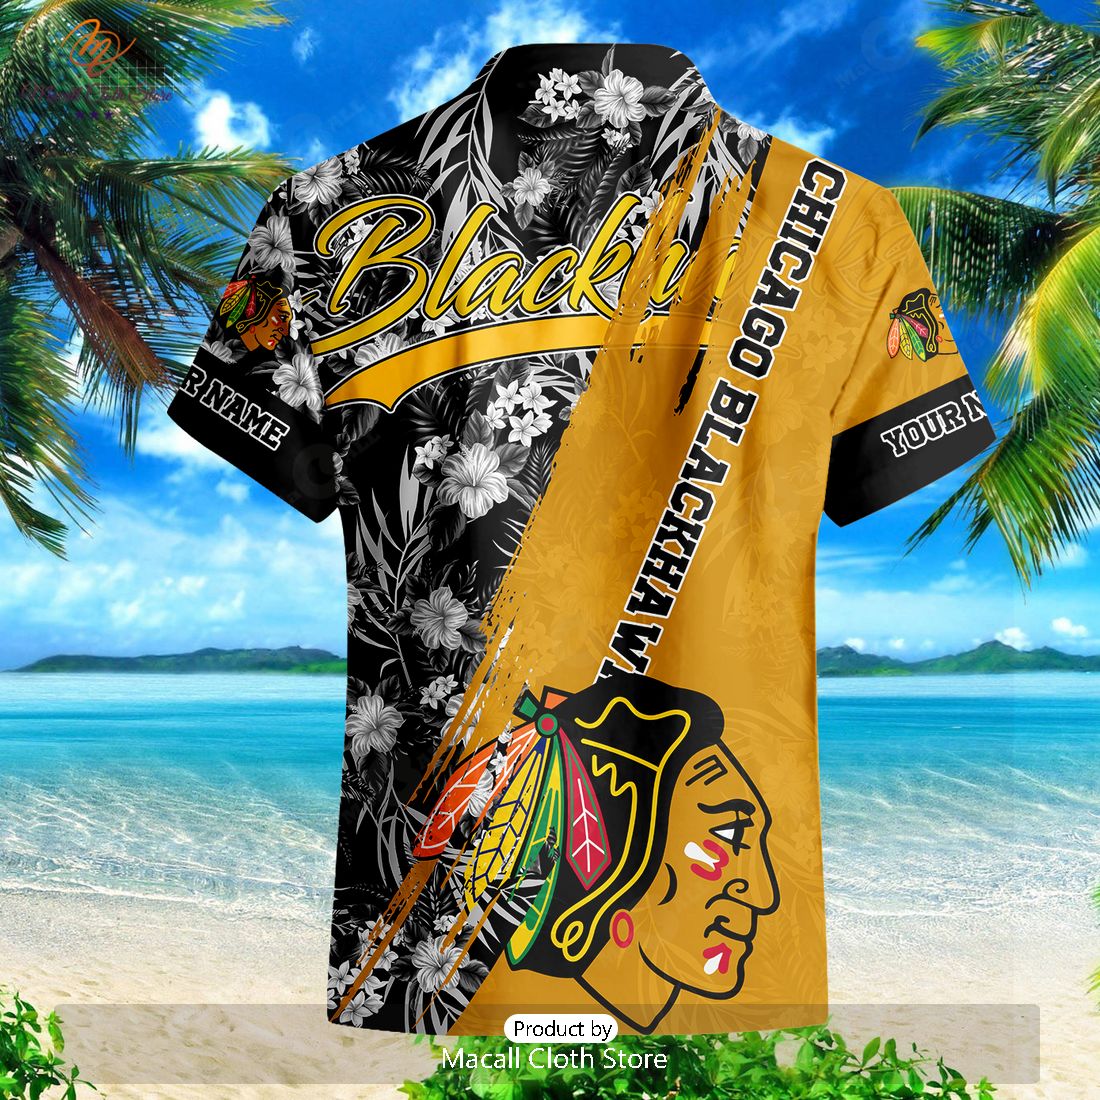 Chicago Blackhawks NHL Trending Hawaiian Shirt And Shorts For Fans